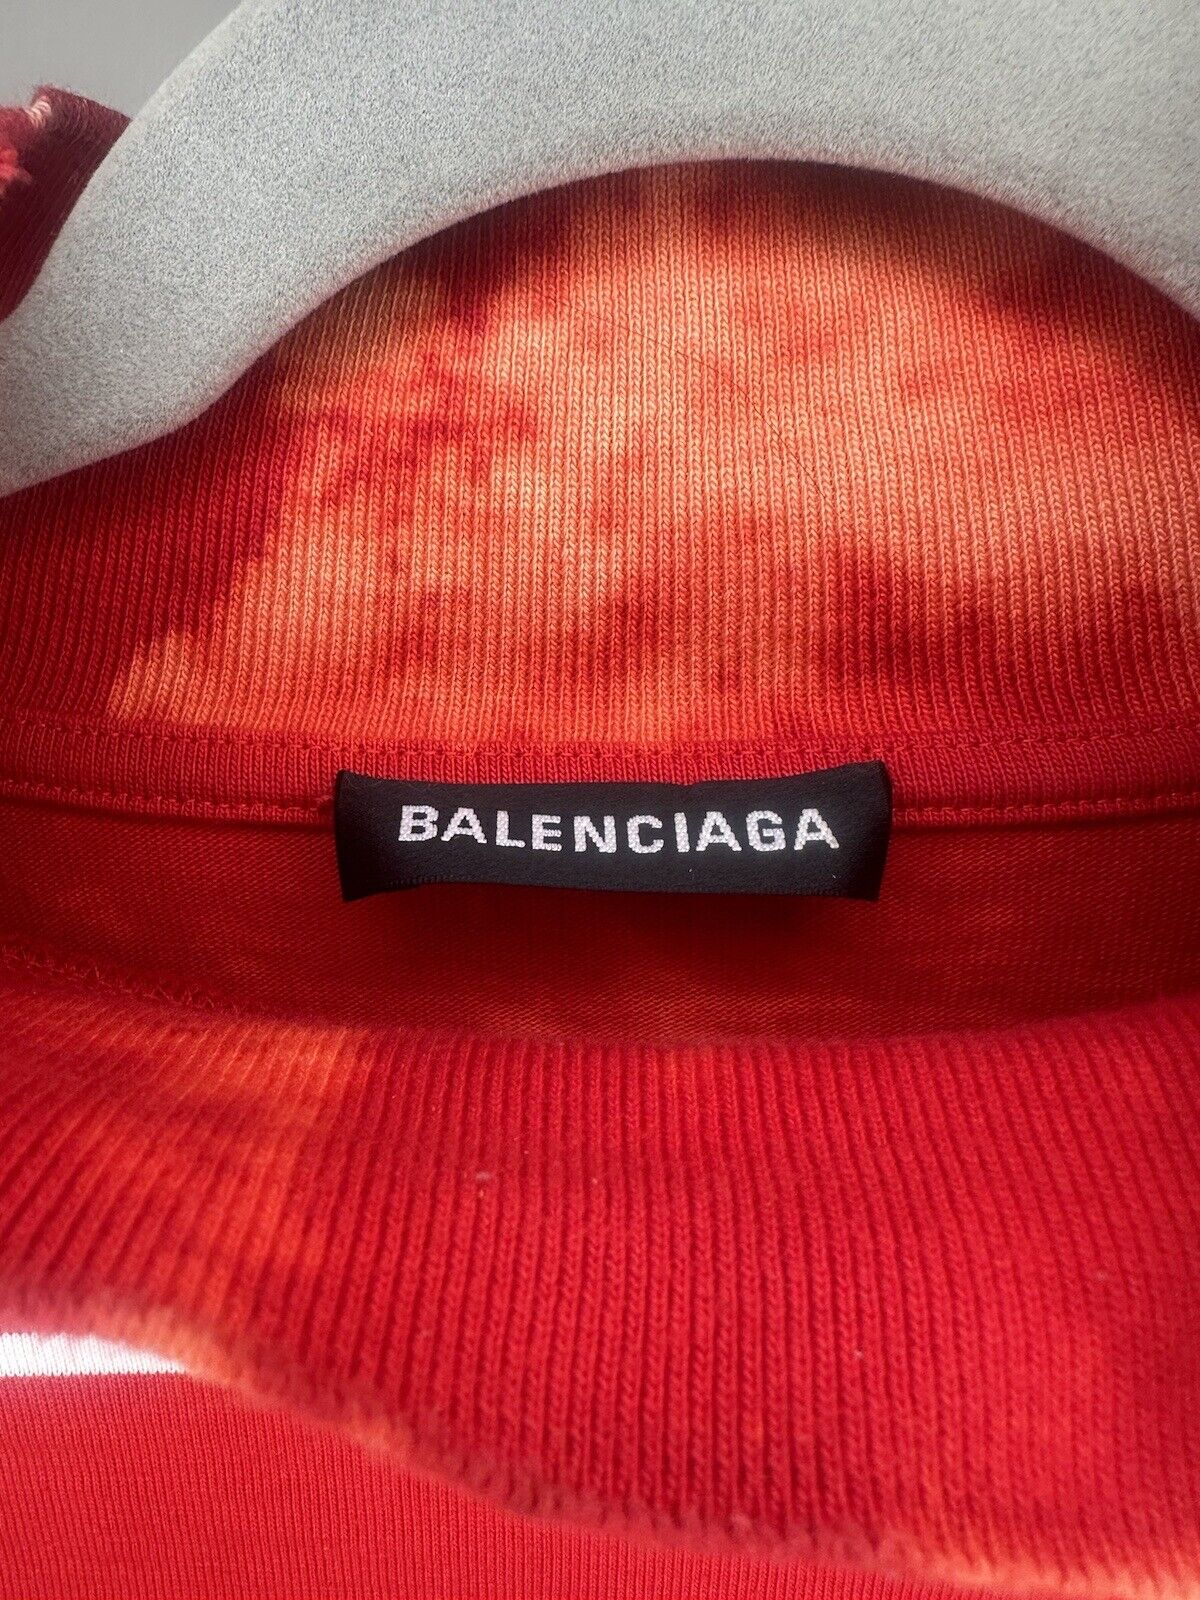 Balenciaga Bleached Sweatshirt - image 6